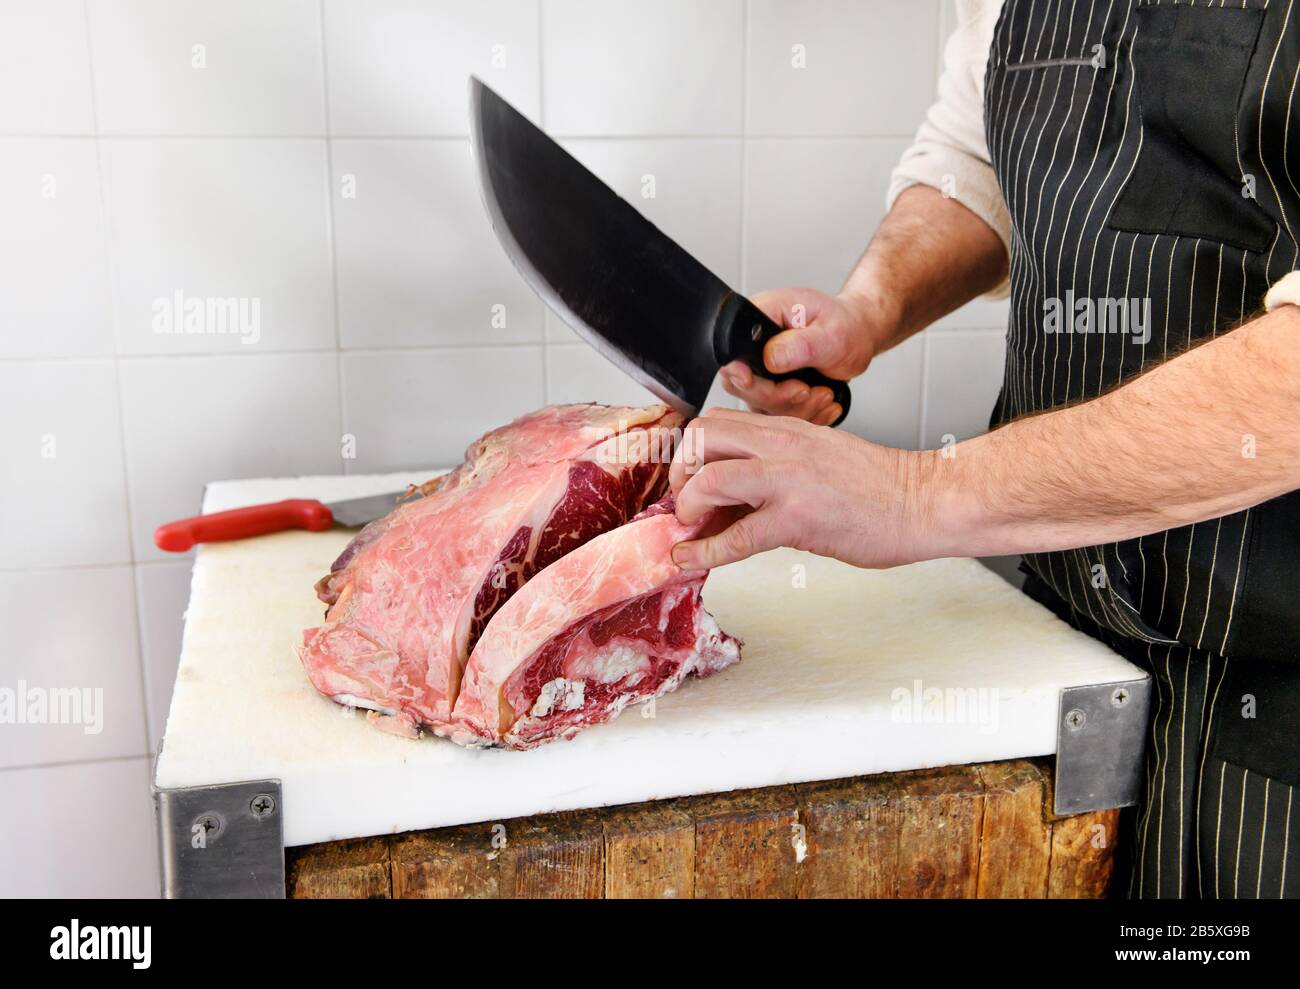 https://c8.alamy.com/comp/2B5XG9B/butcher-using-a-large-cleaver-to-cut-rib-eye-steaks-on-a-butchers-board-in-the-butchery-in-a-close-up-on-his-hands-2B5XG9B.jpg